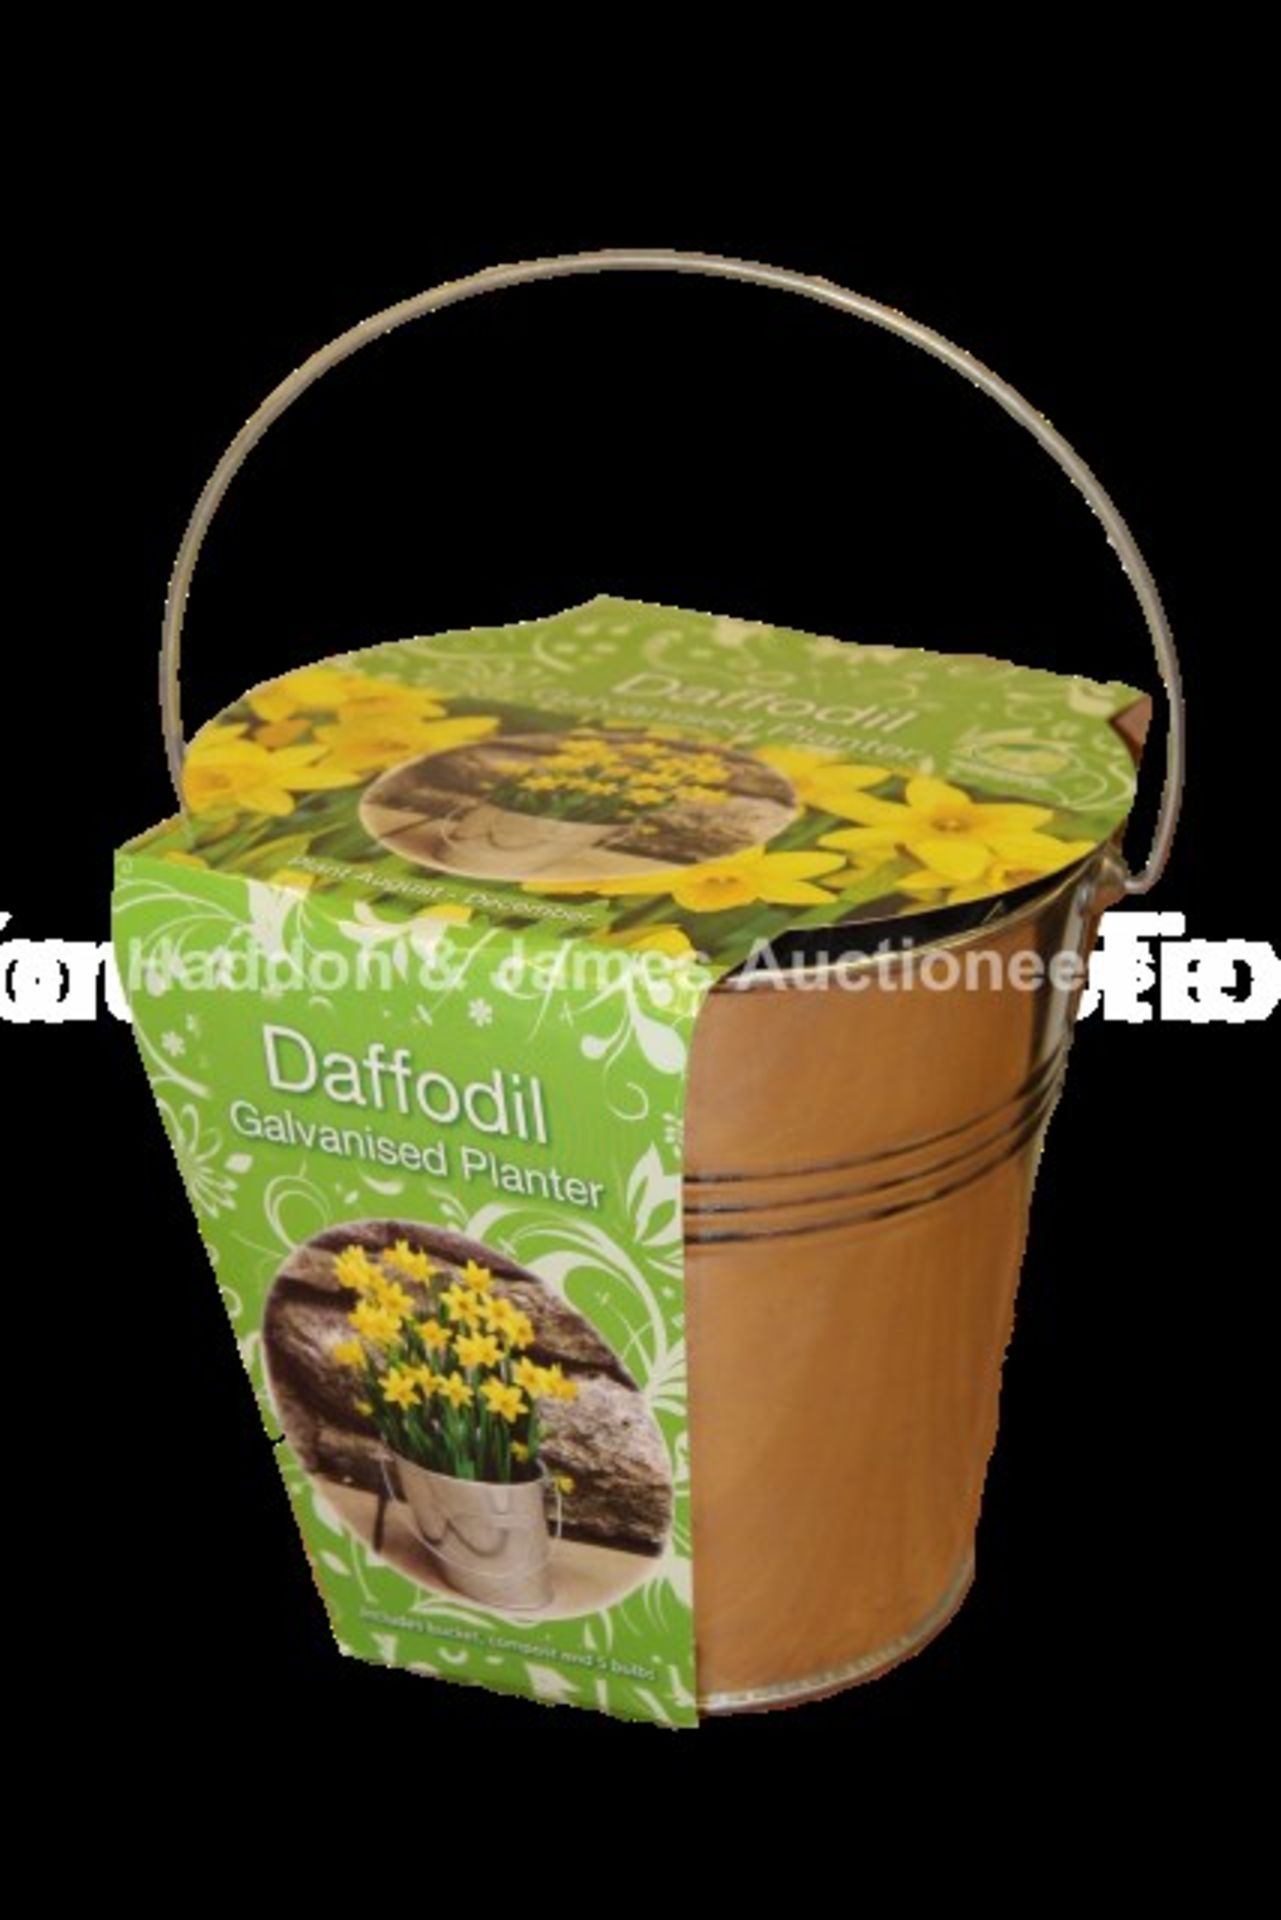 V *TRADE QTY* Brand New Daffodil 5 Bulb Galvanised Bucket Gift Set Including 5 Bulbs, Bucket Planter